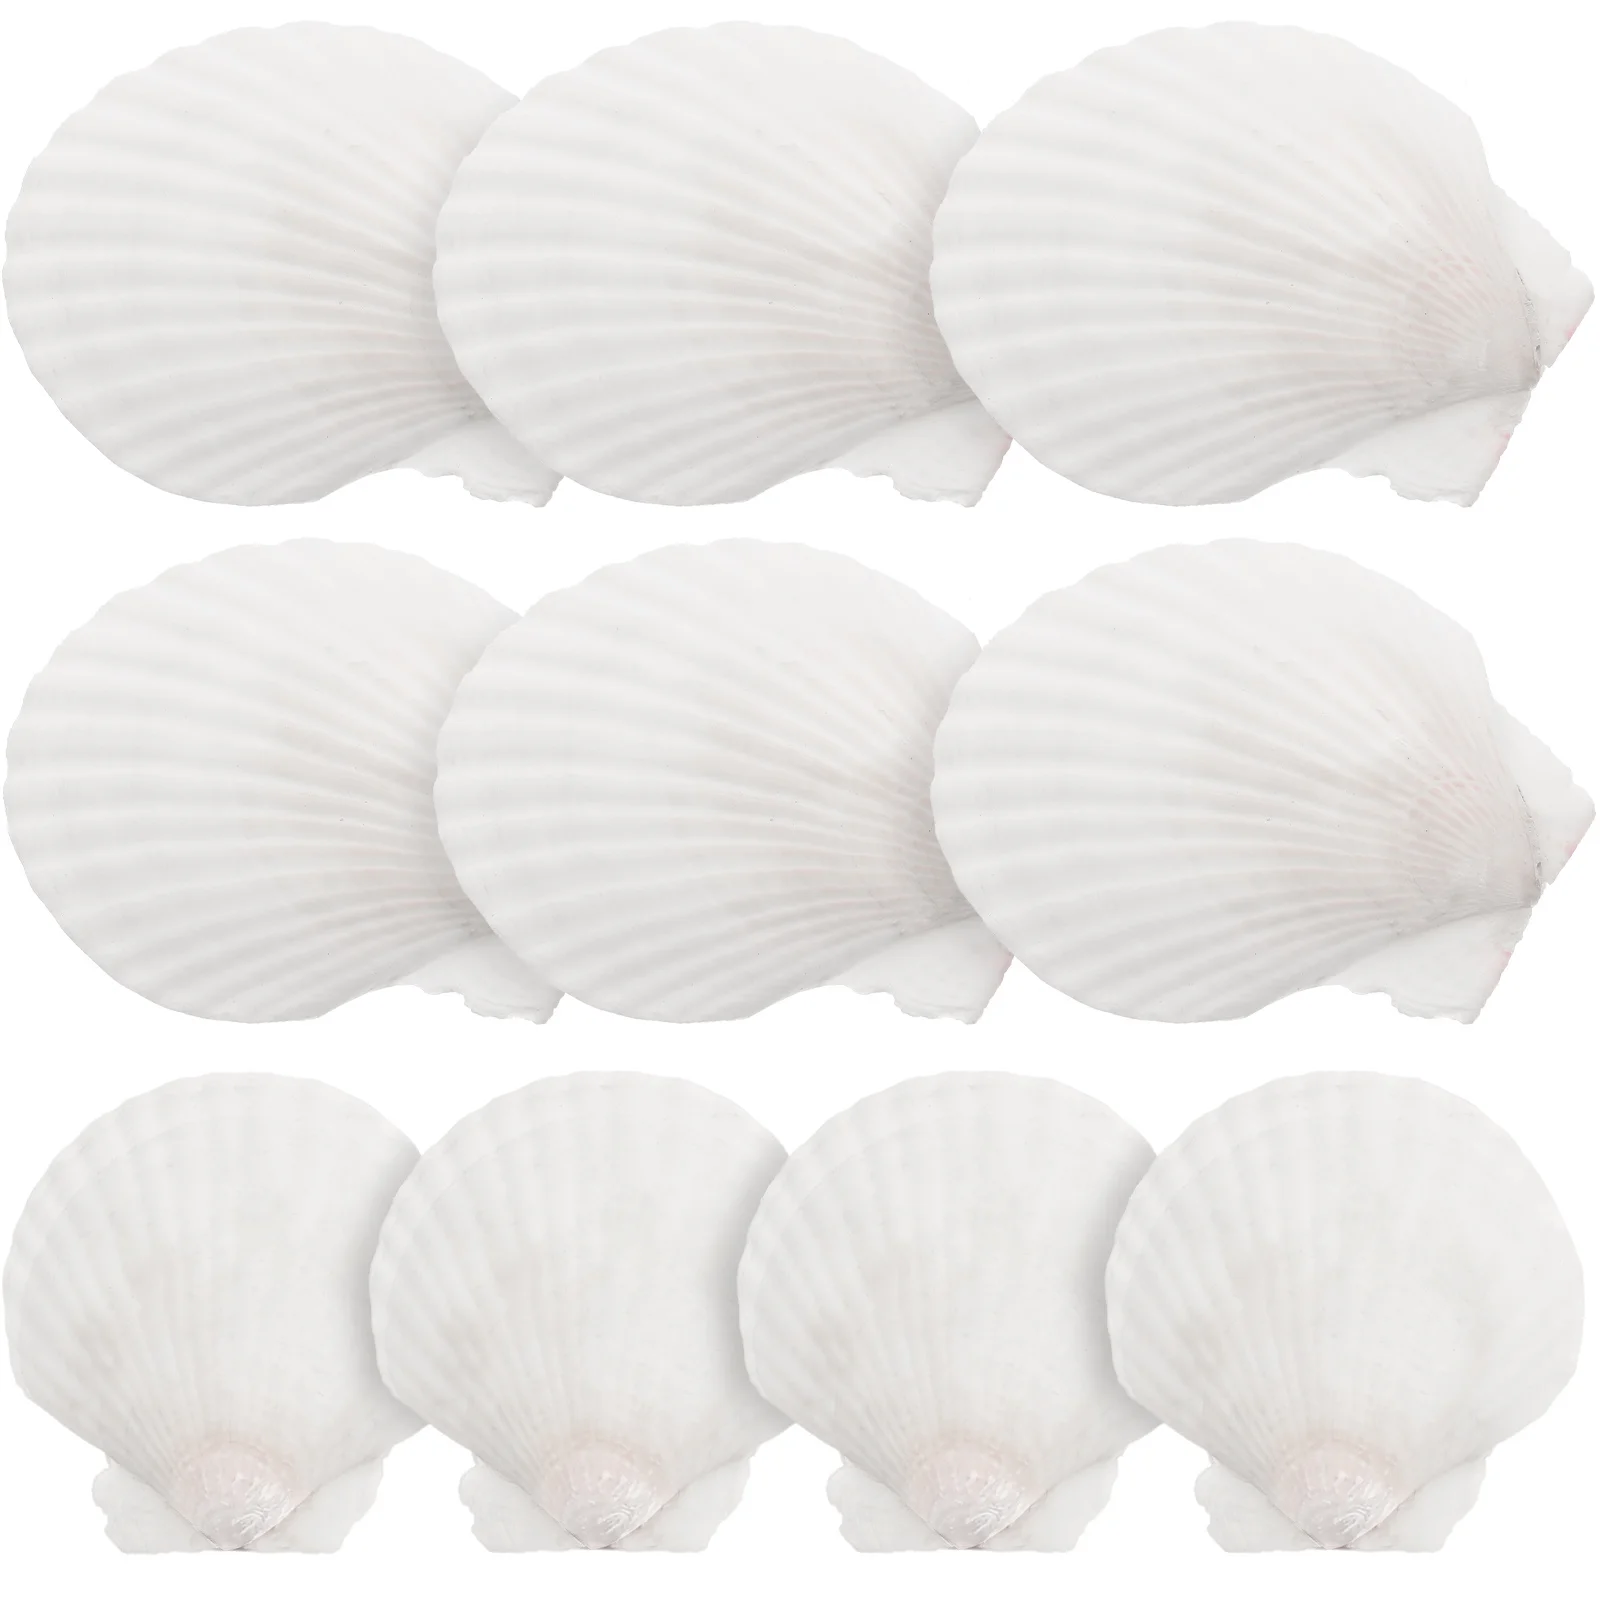 

Shell Shells Seashells Crafts Natural Decor Scallops Tank Nautical Ornament Sea Conch Diy Christmas Ornaments Scallop Adornment